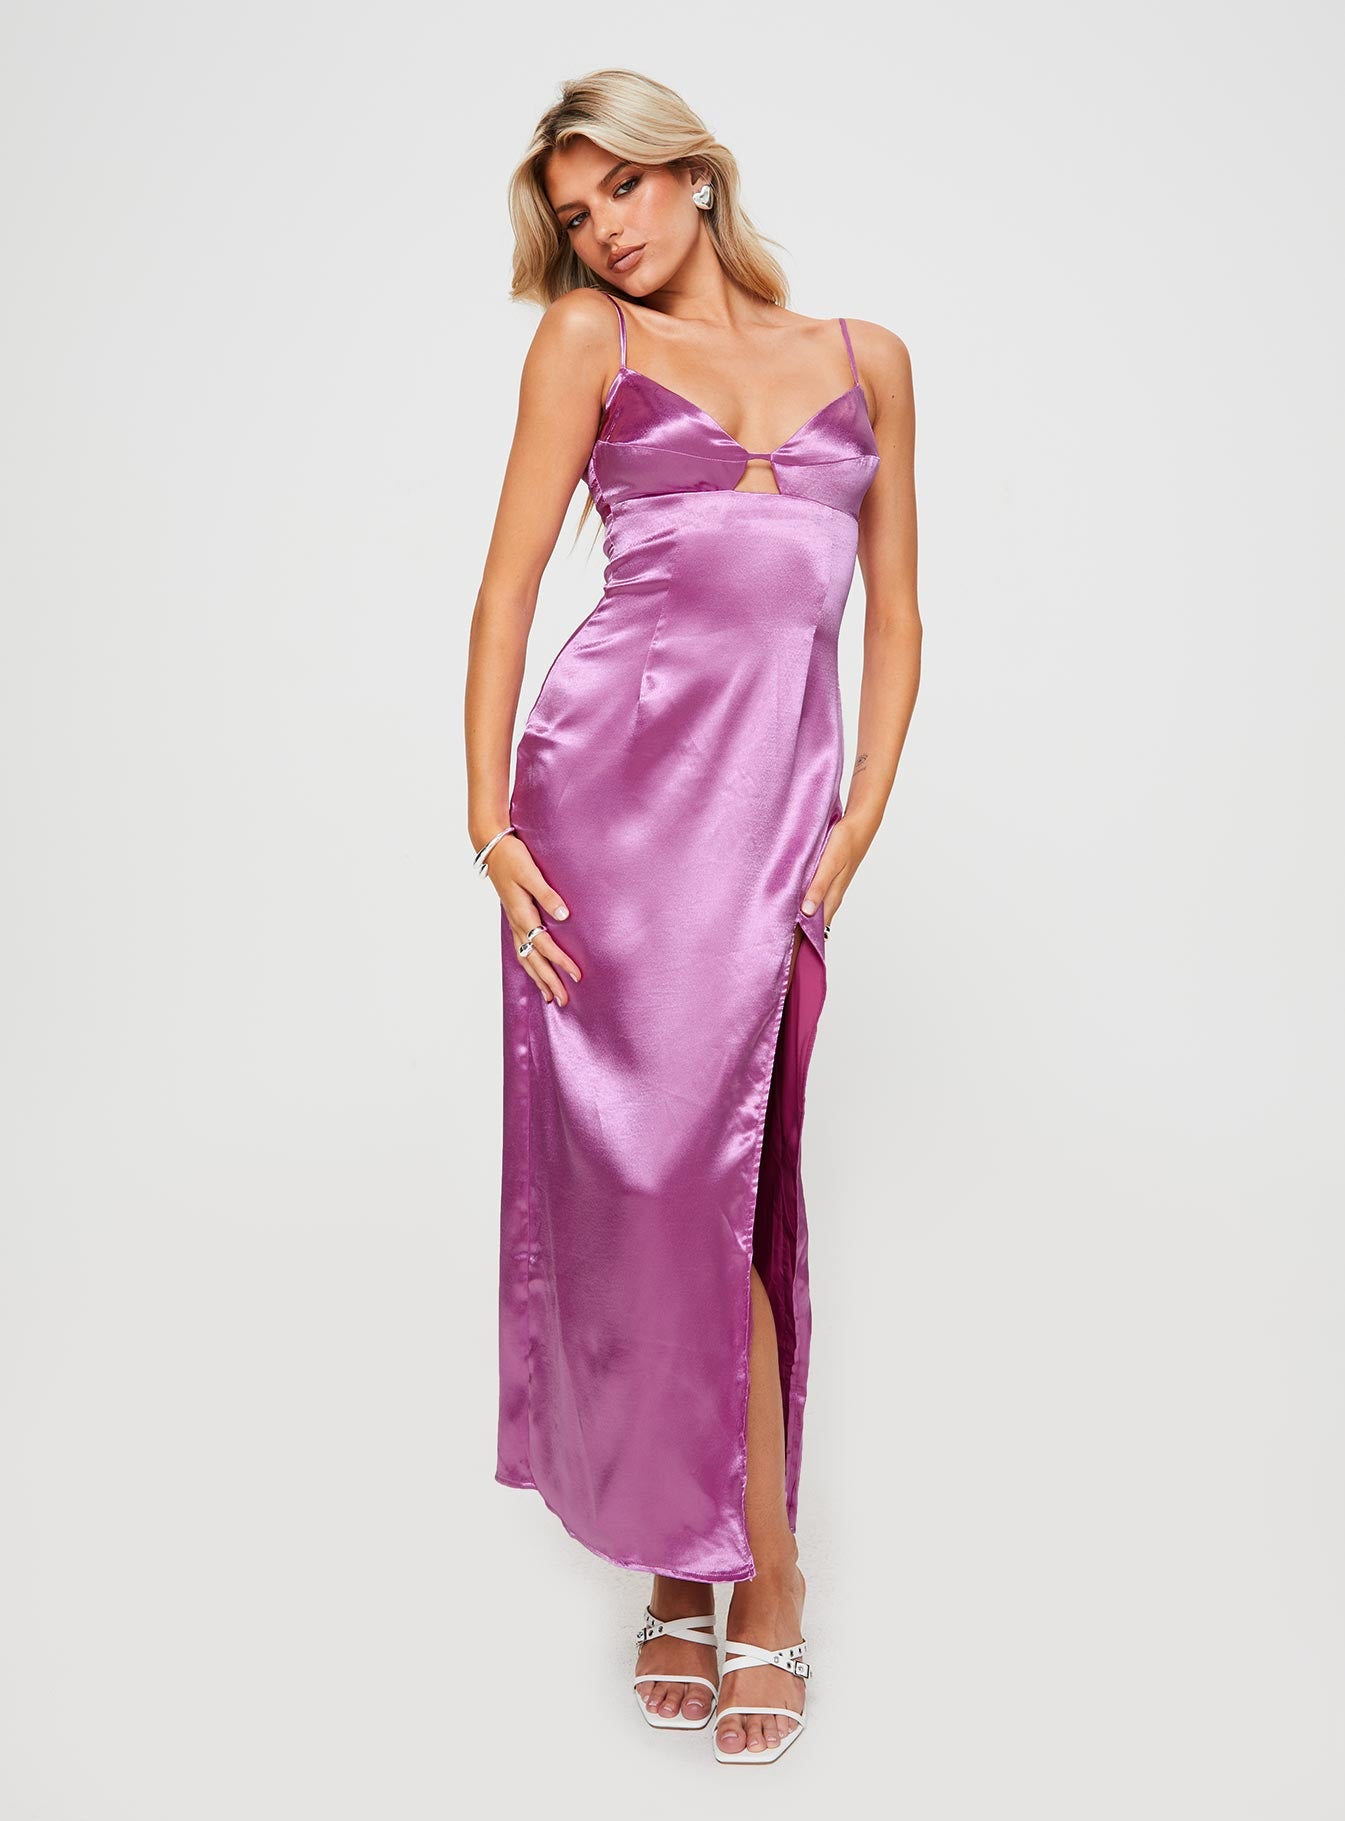 Shop Formal Dress - Amandine Maxi Dress Pink sixth image